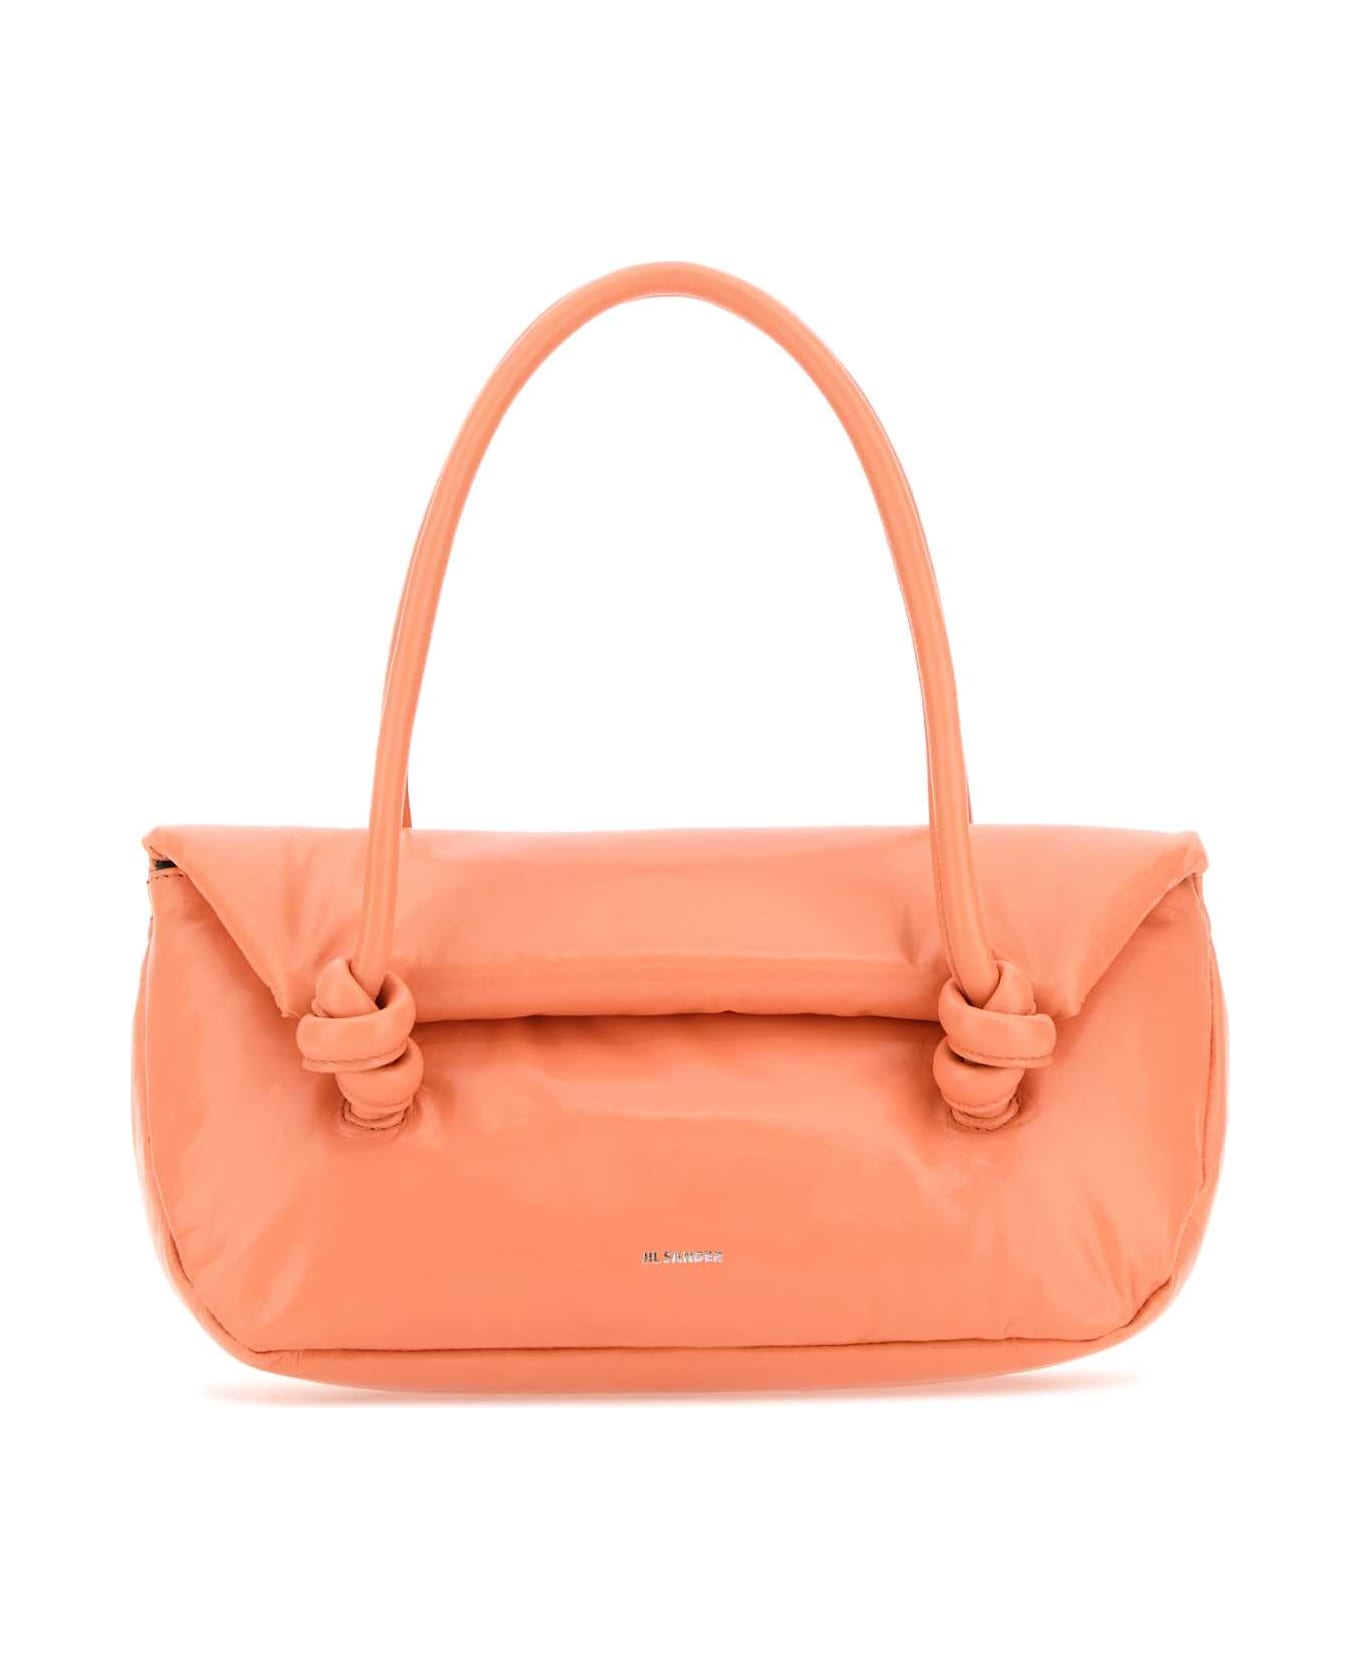 Jil Sander Peach Pink Leather Small Knot Handle Handbag - 639